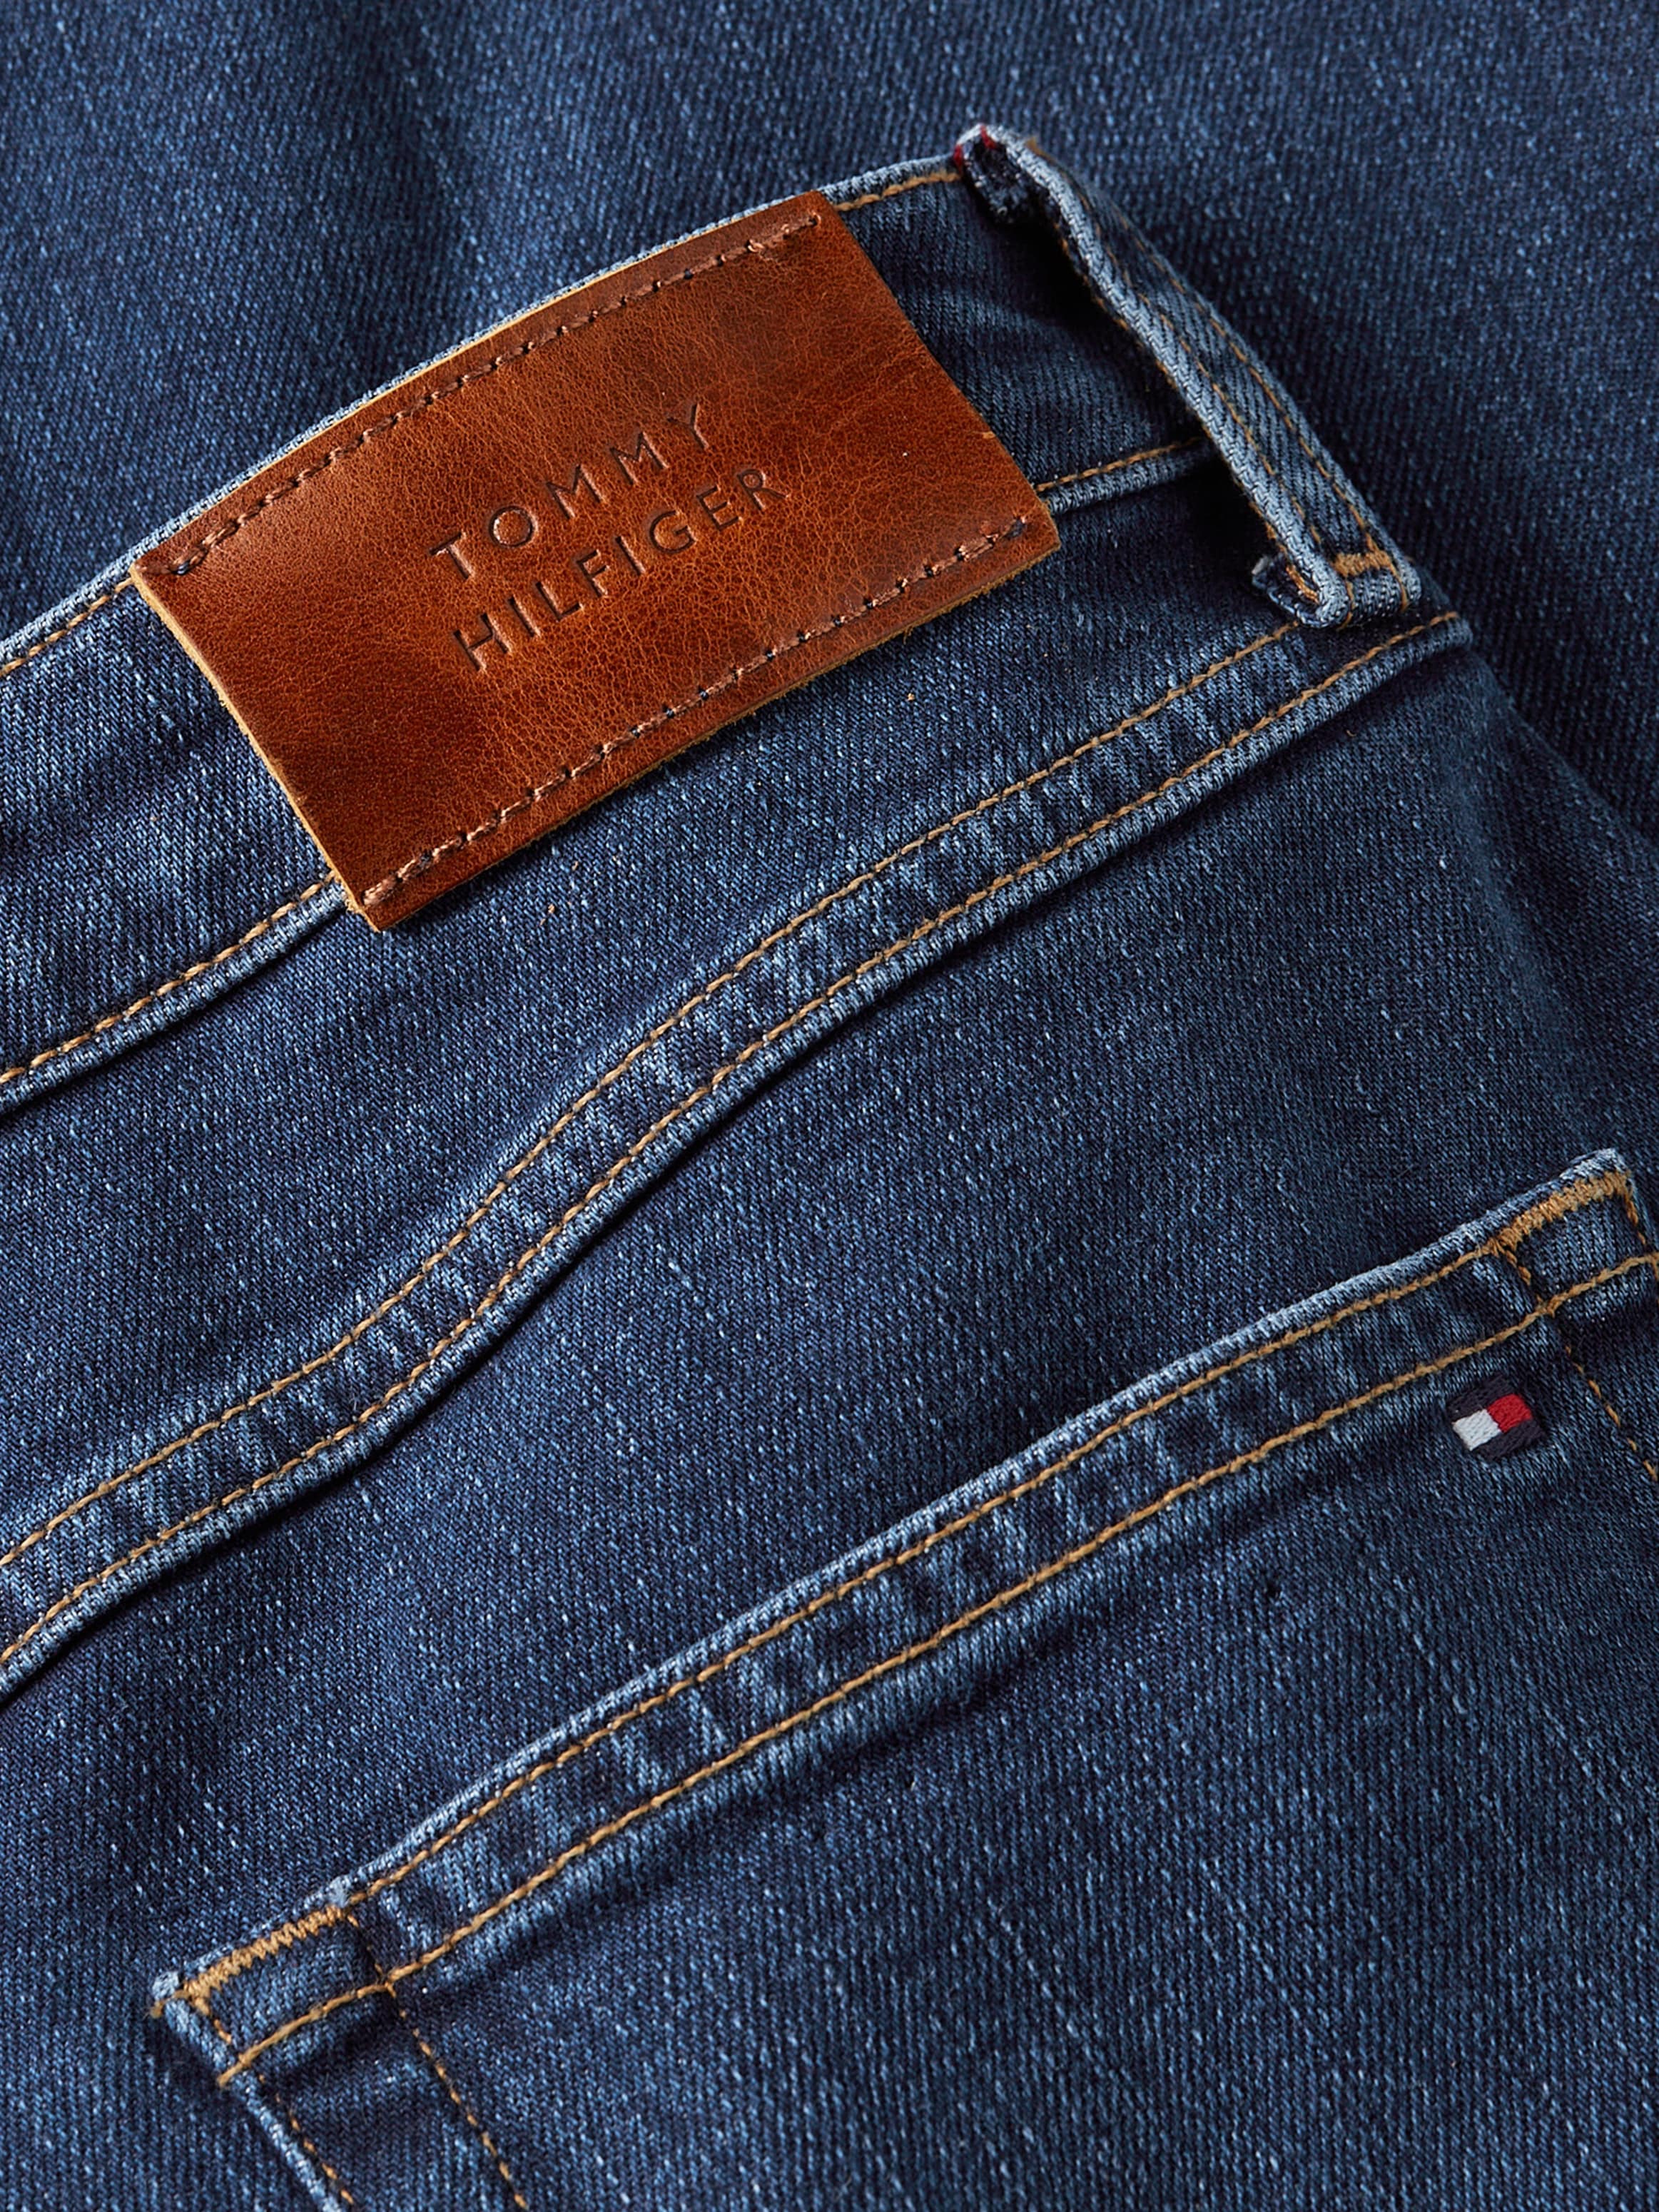 Tommy Hilfiger Straight-Jeans, in blauer Waschung